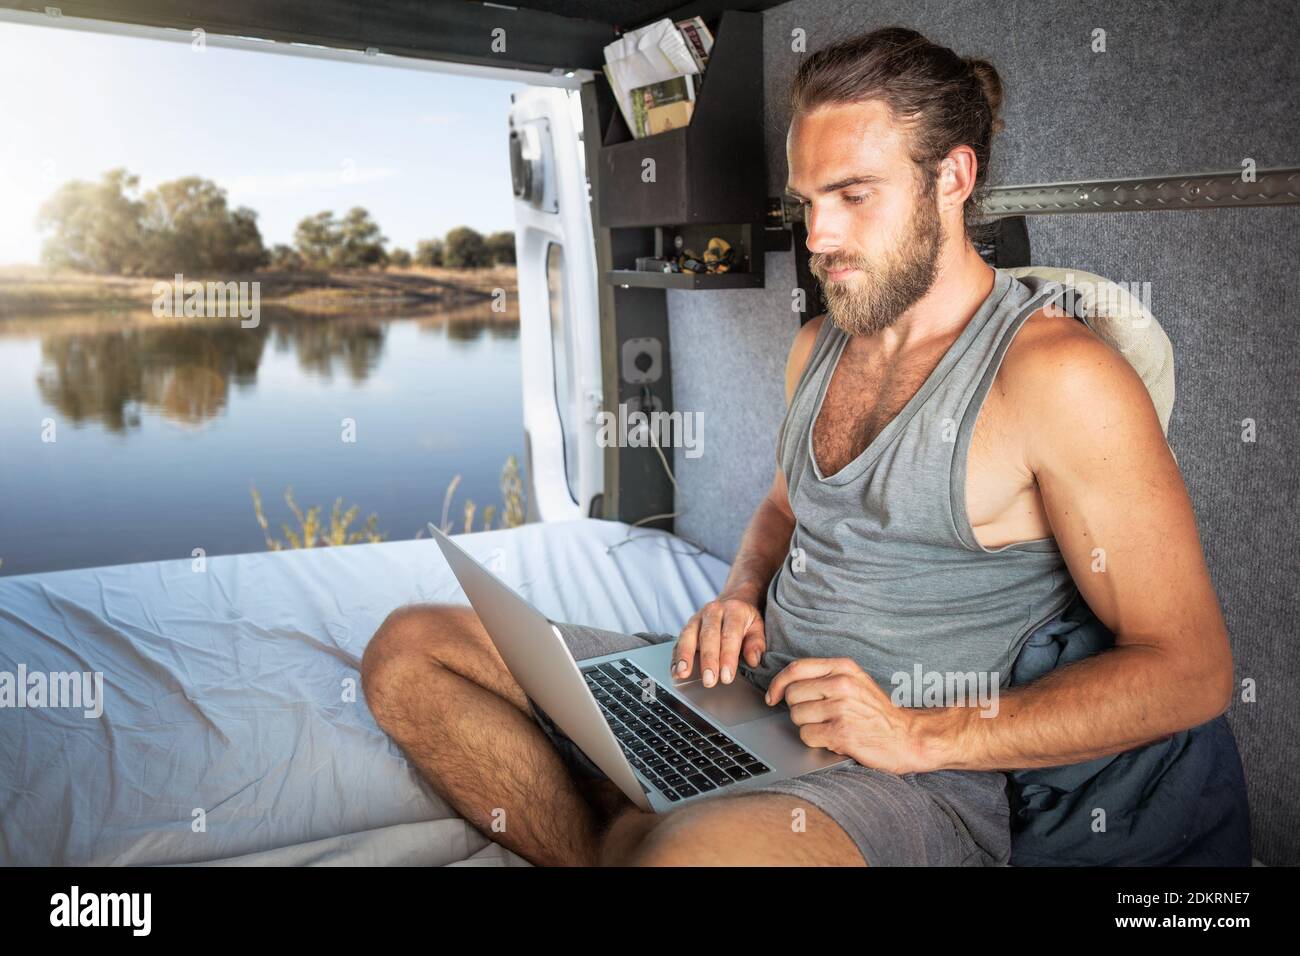 Man using a laptop inside his camper van Stock Photo